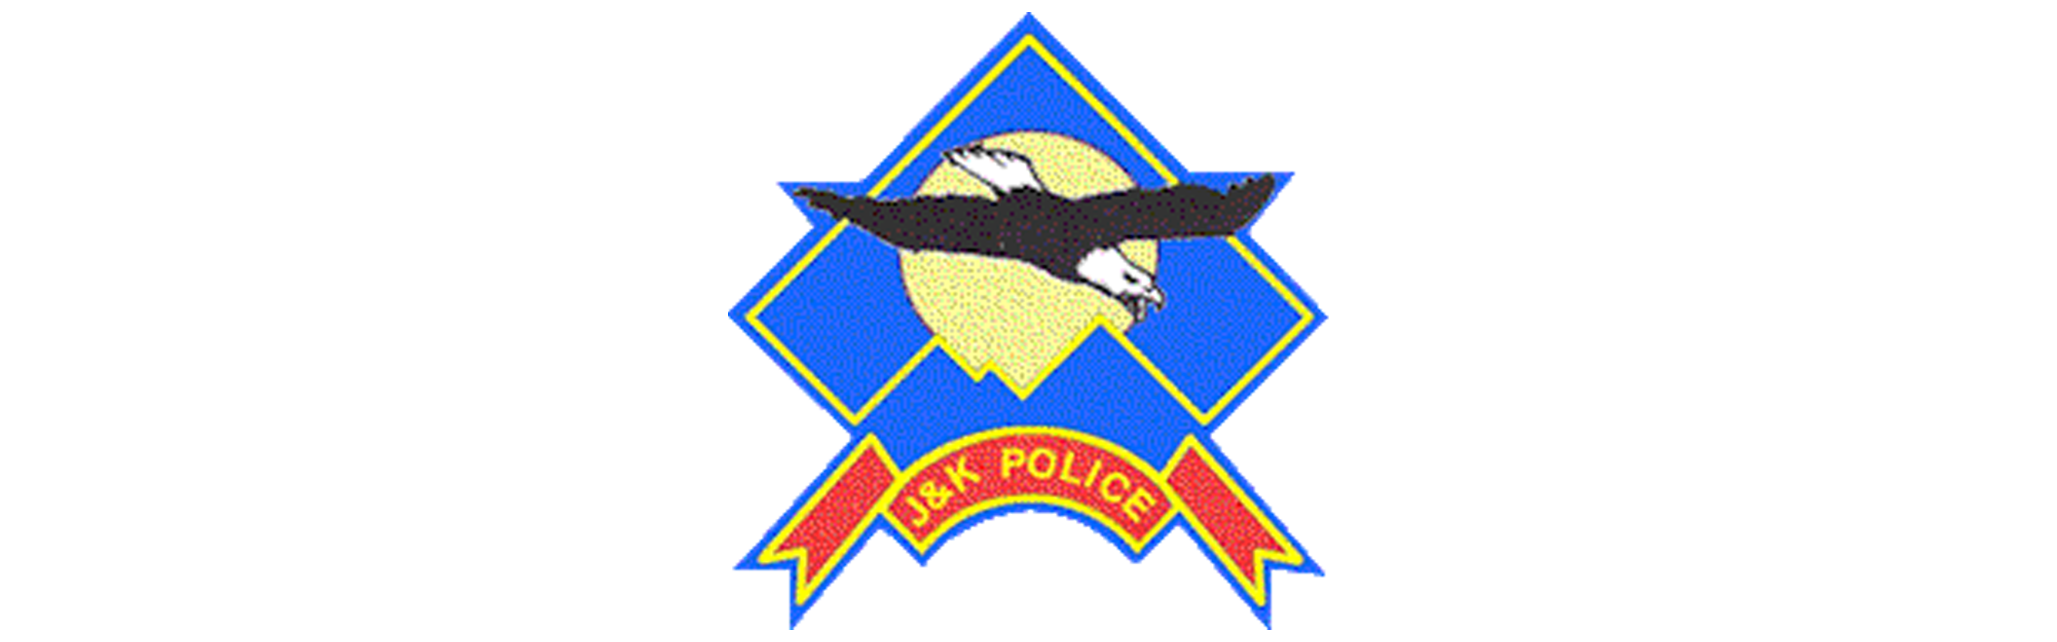 J&K Police Housing Corp. Ltd. 